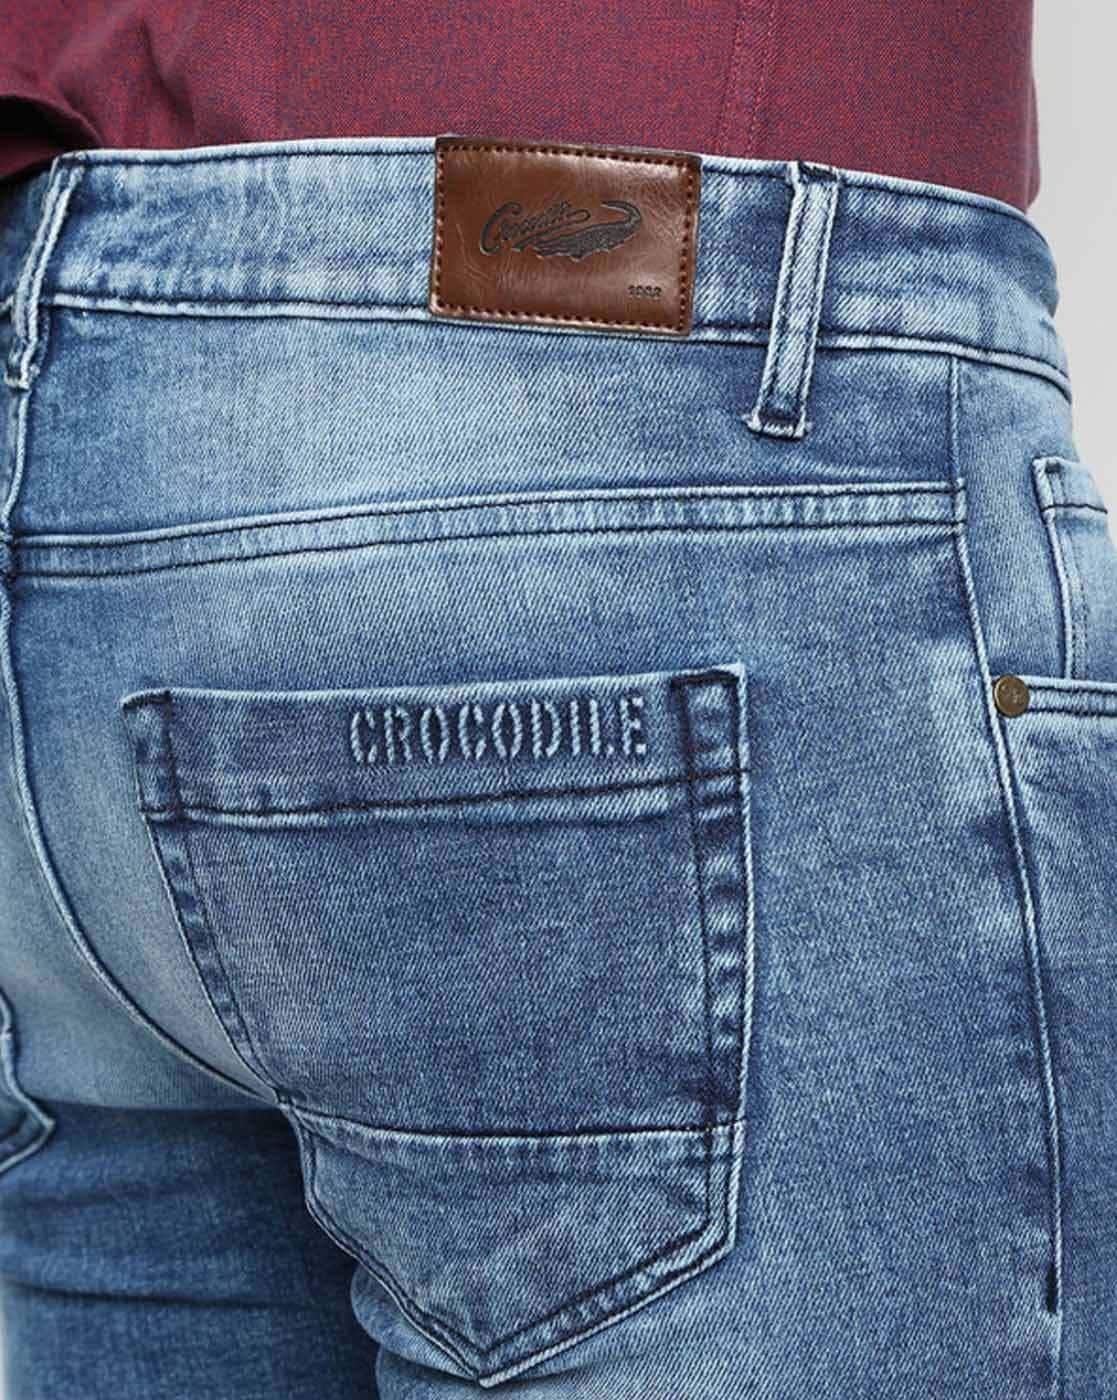 crocodile jeans price